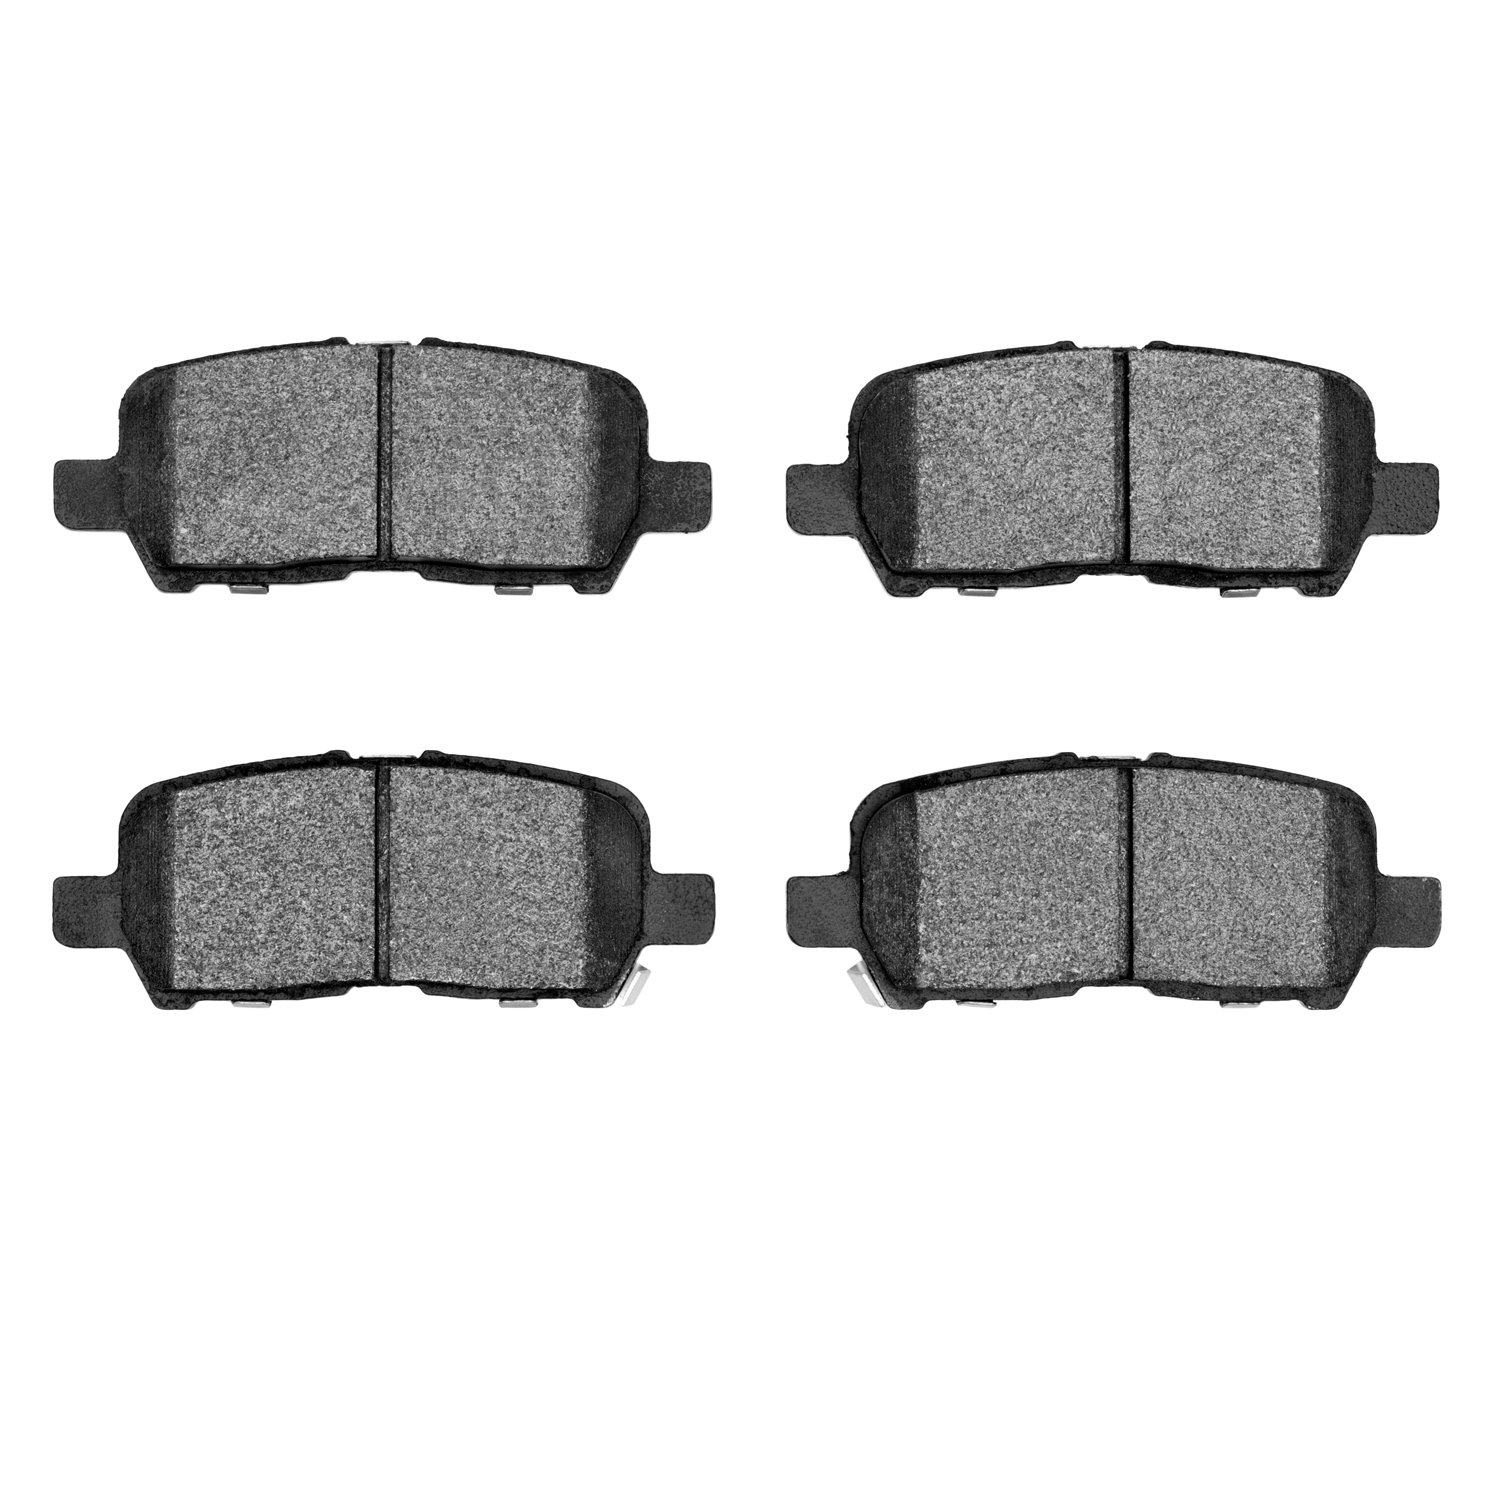 1310-0999-00 3000-Series Ceramic Brake Pads, 2004-2016 GM, Position: Rear